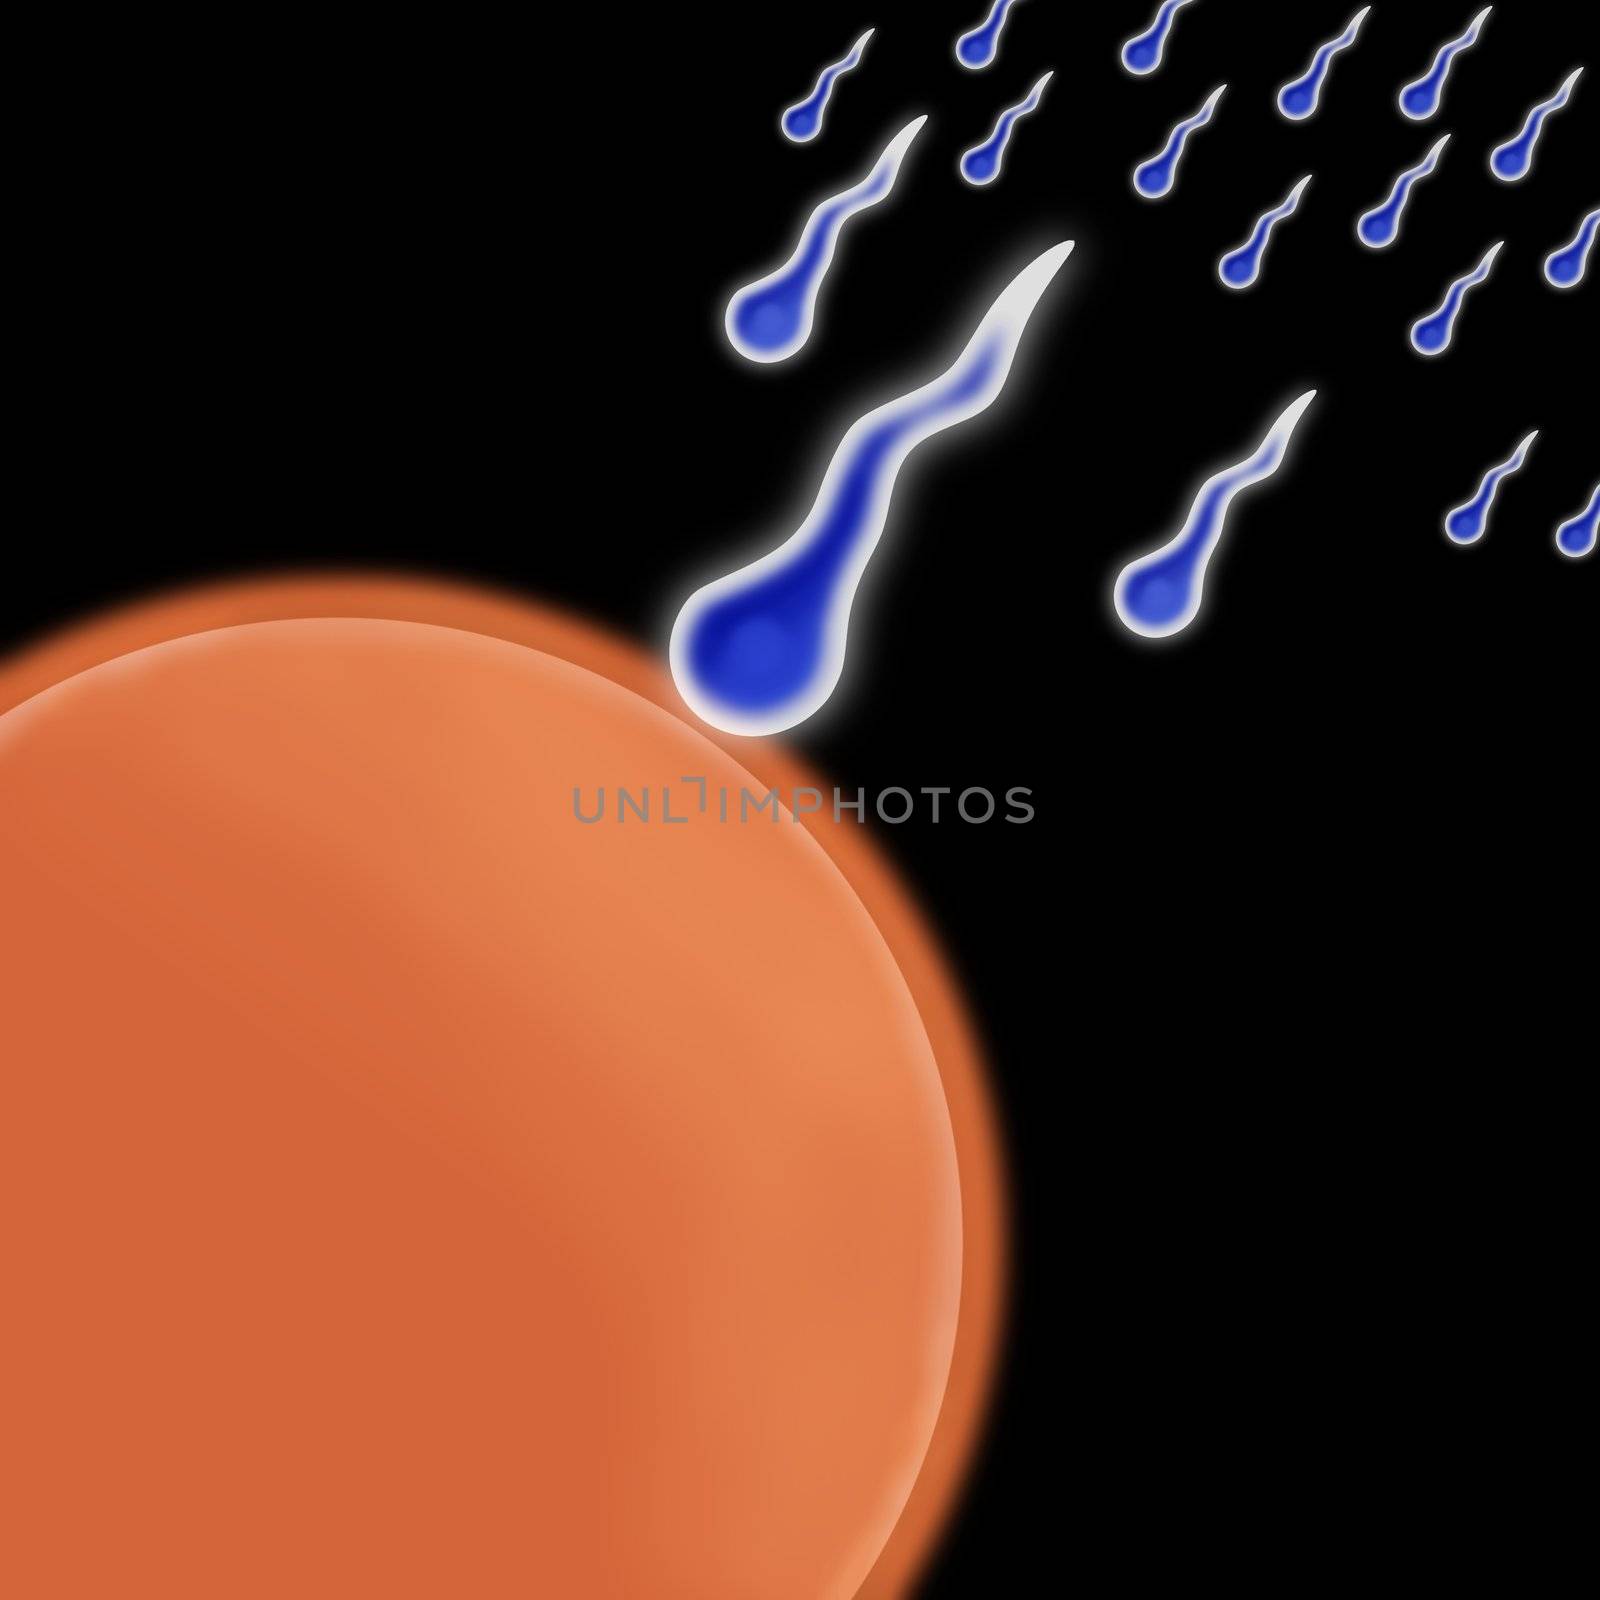 Blue sperm racing toward an orange egg on black background.